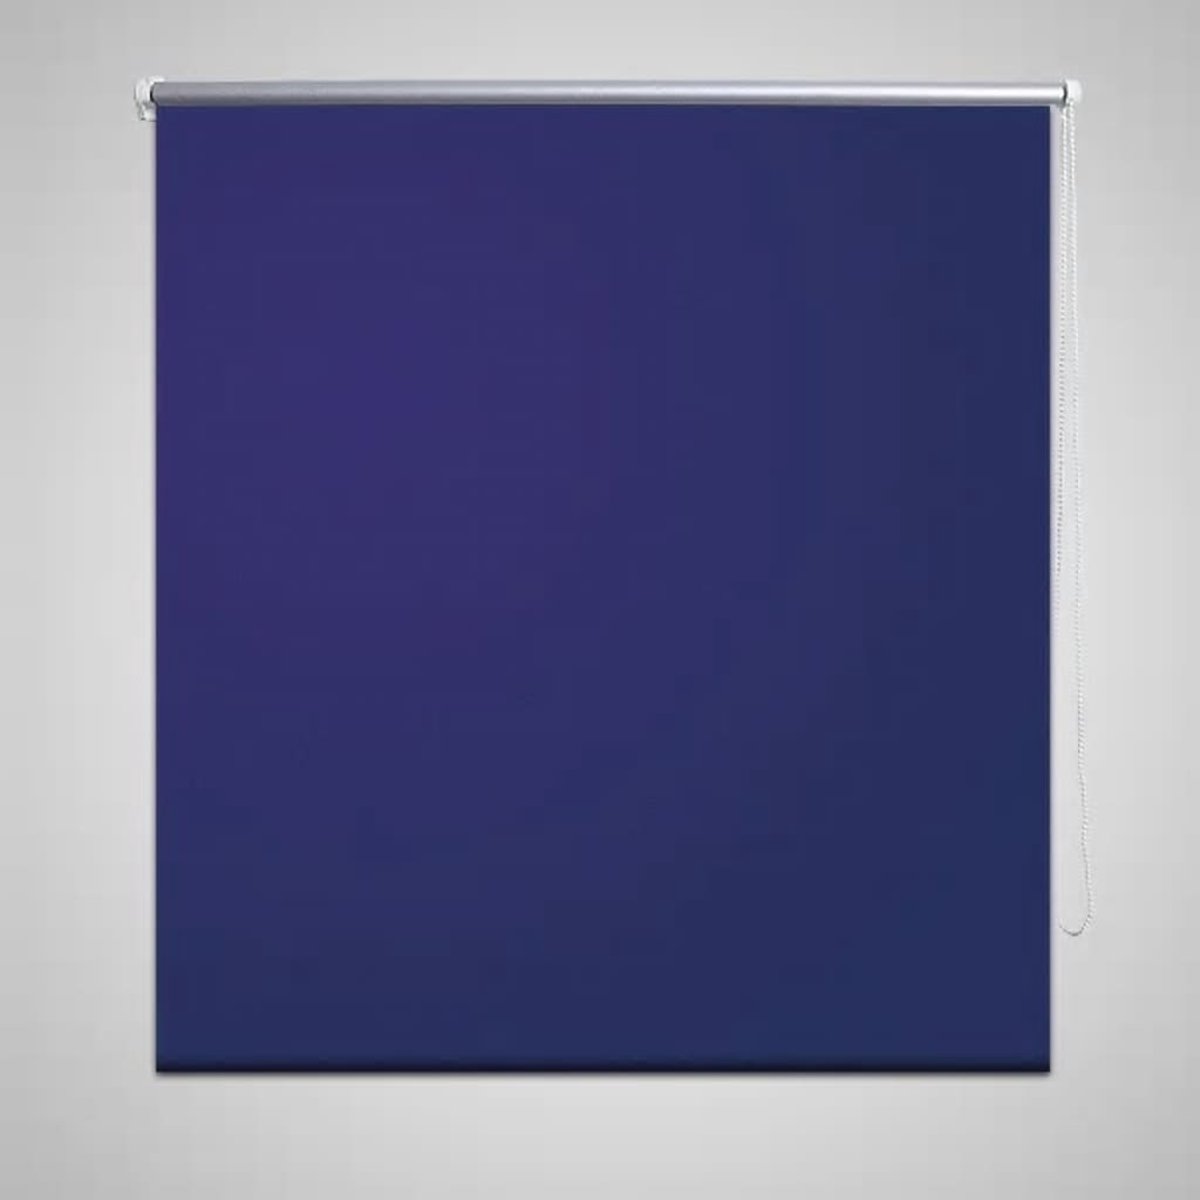 VidaLife Rolgordijn verduisterend 100 x 175 cm marineblauw